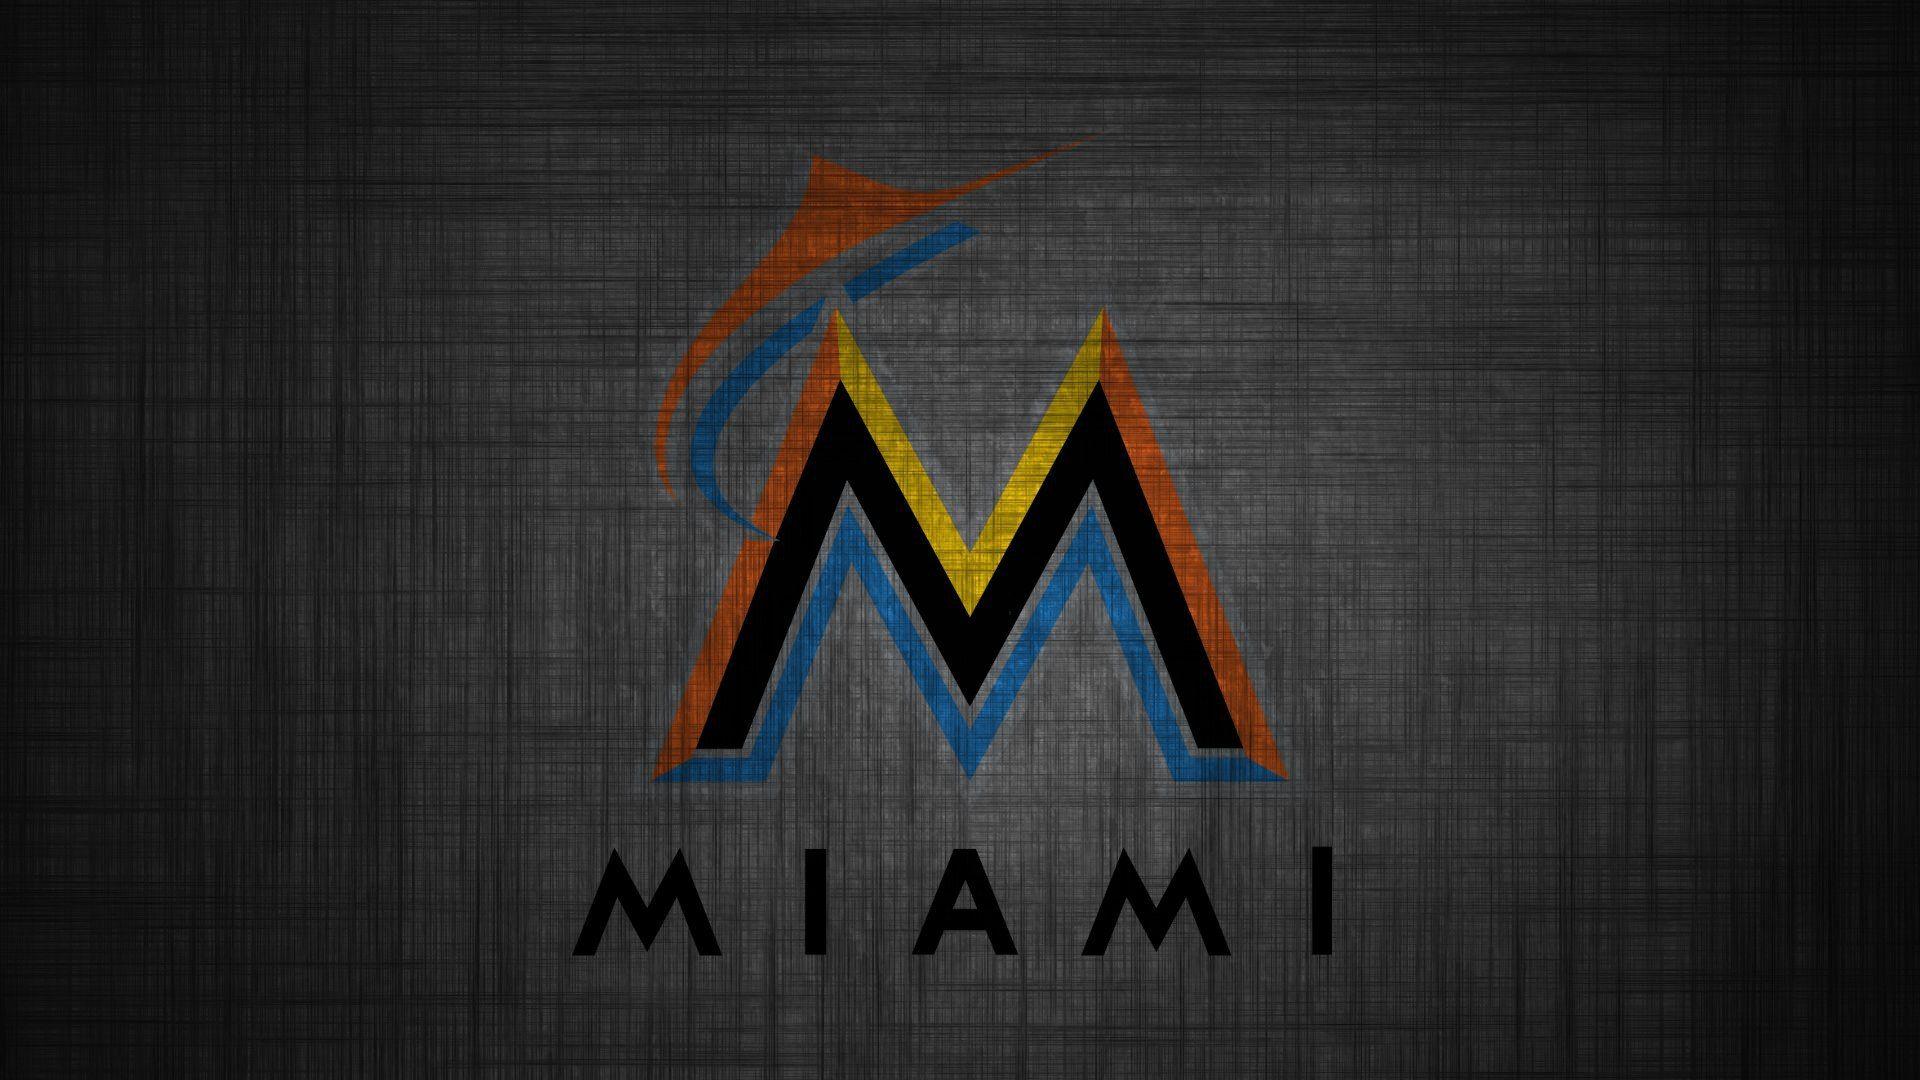 42+] Miami Marlins Wallpapers - WallpaperSafari